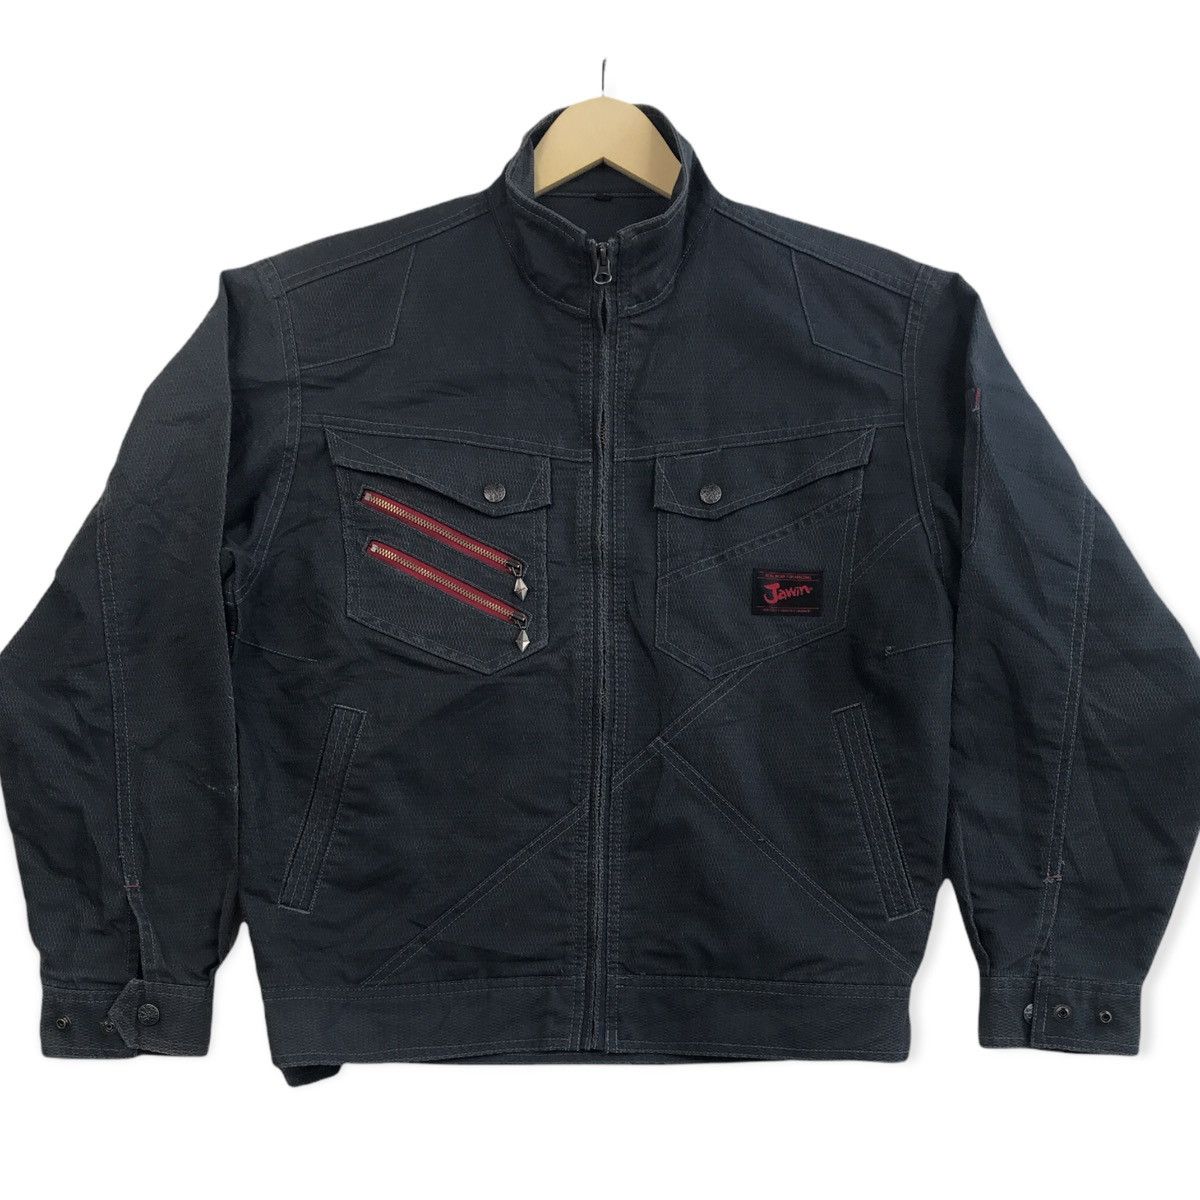 Japanese Brand Jawin jacket | Grailed